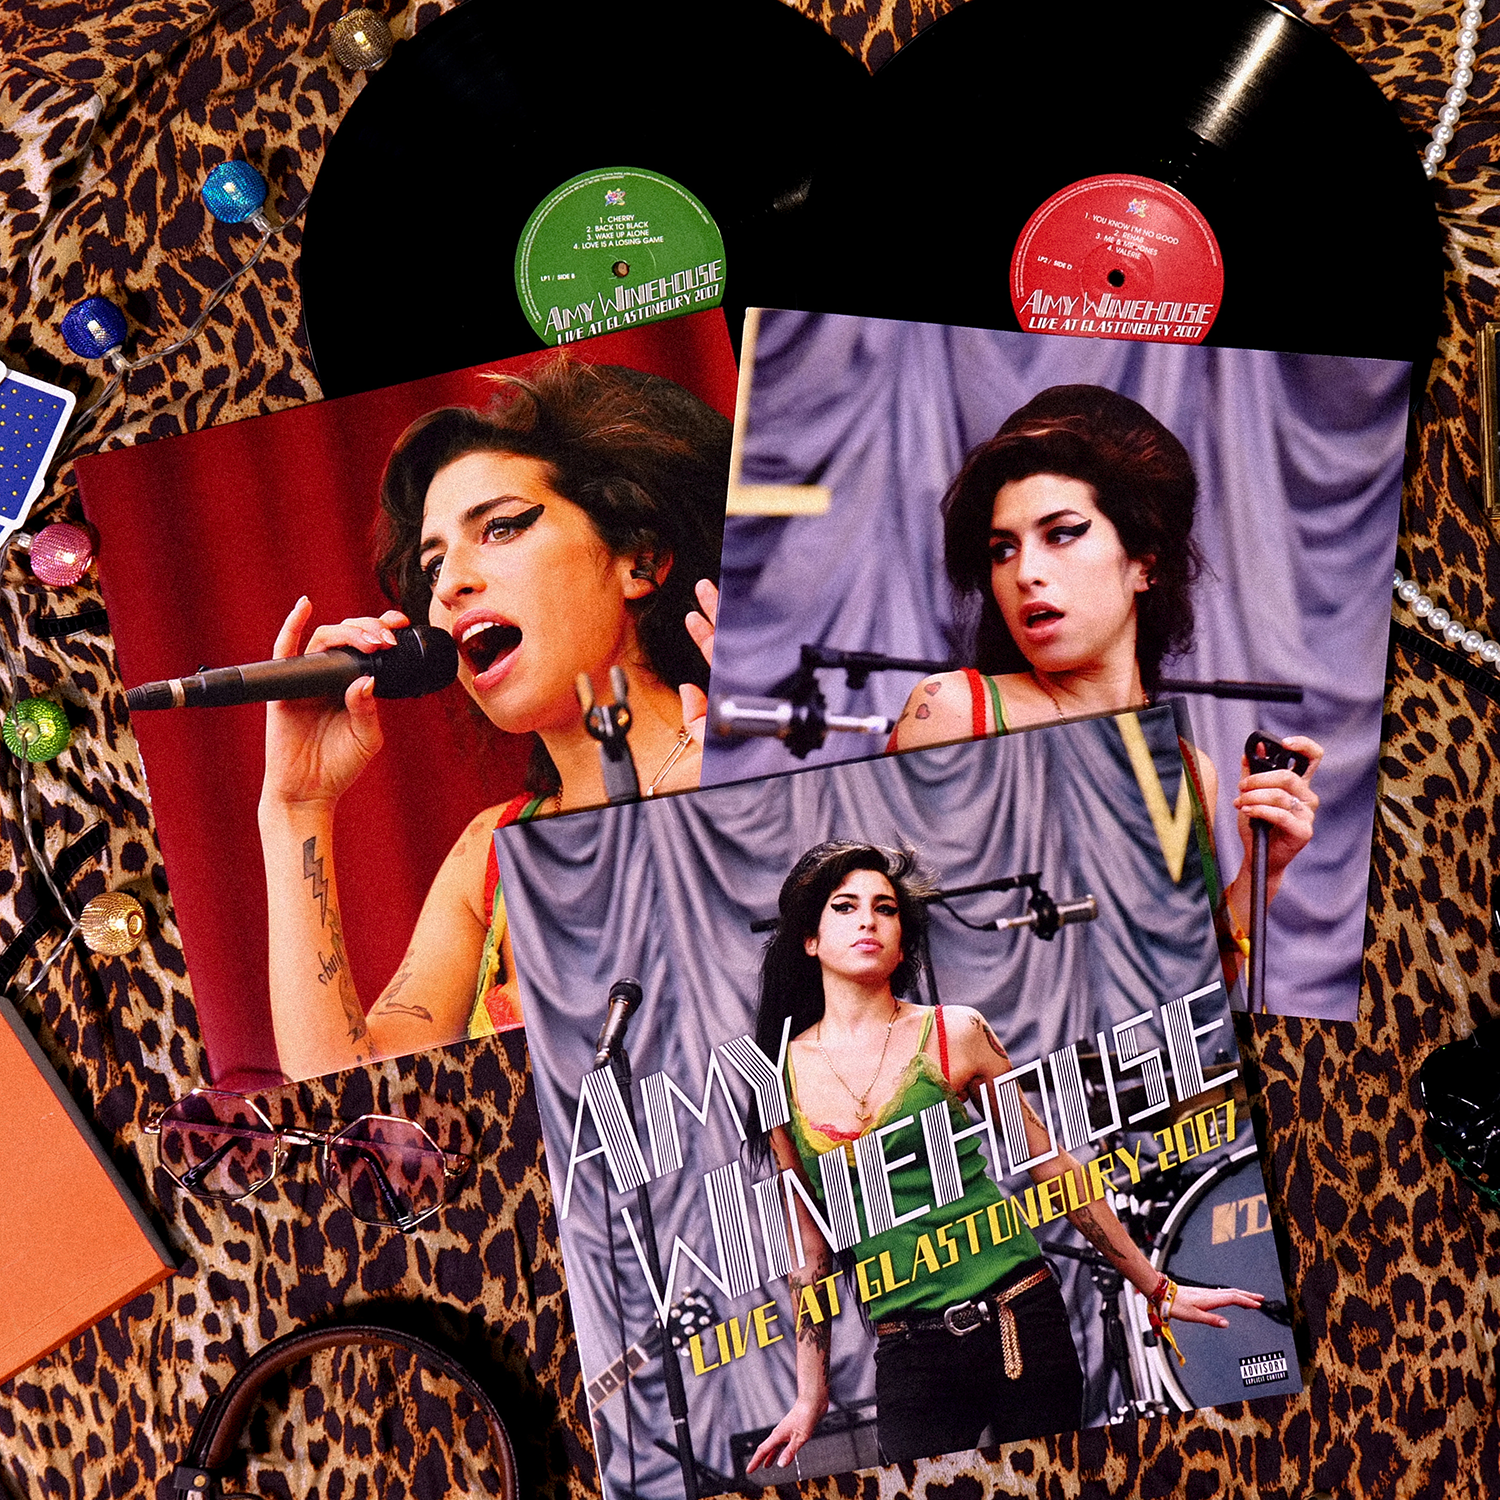 Amy Winehouse - Live At Glastonbury: 2LP